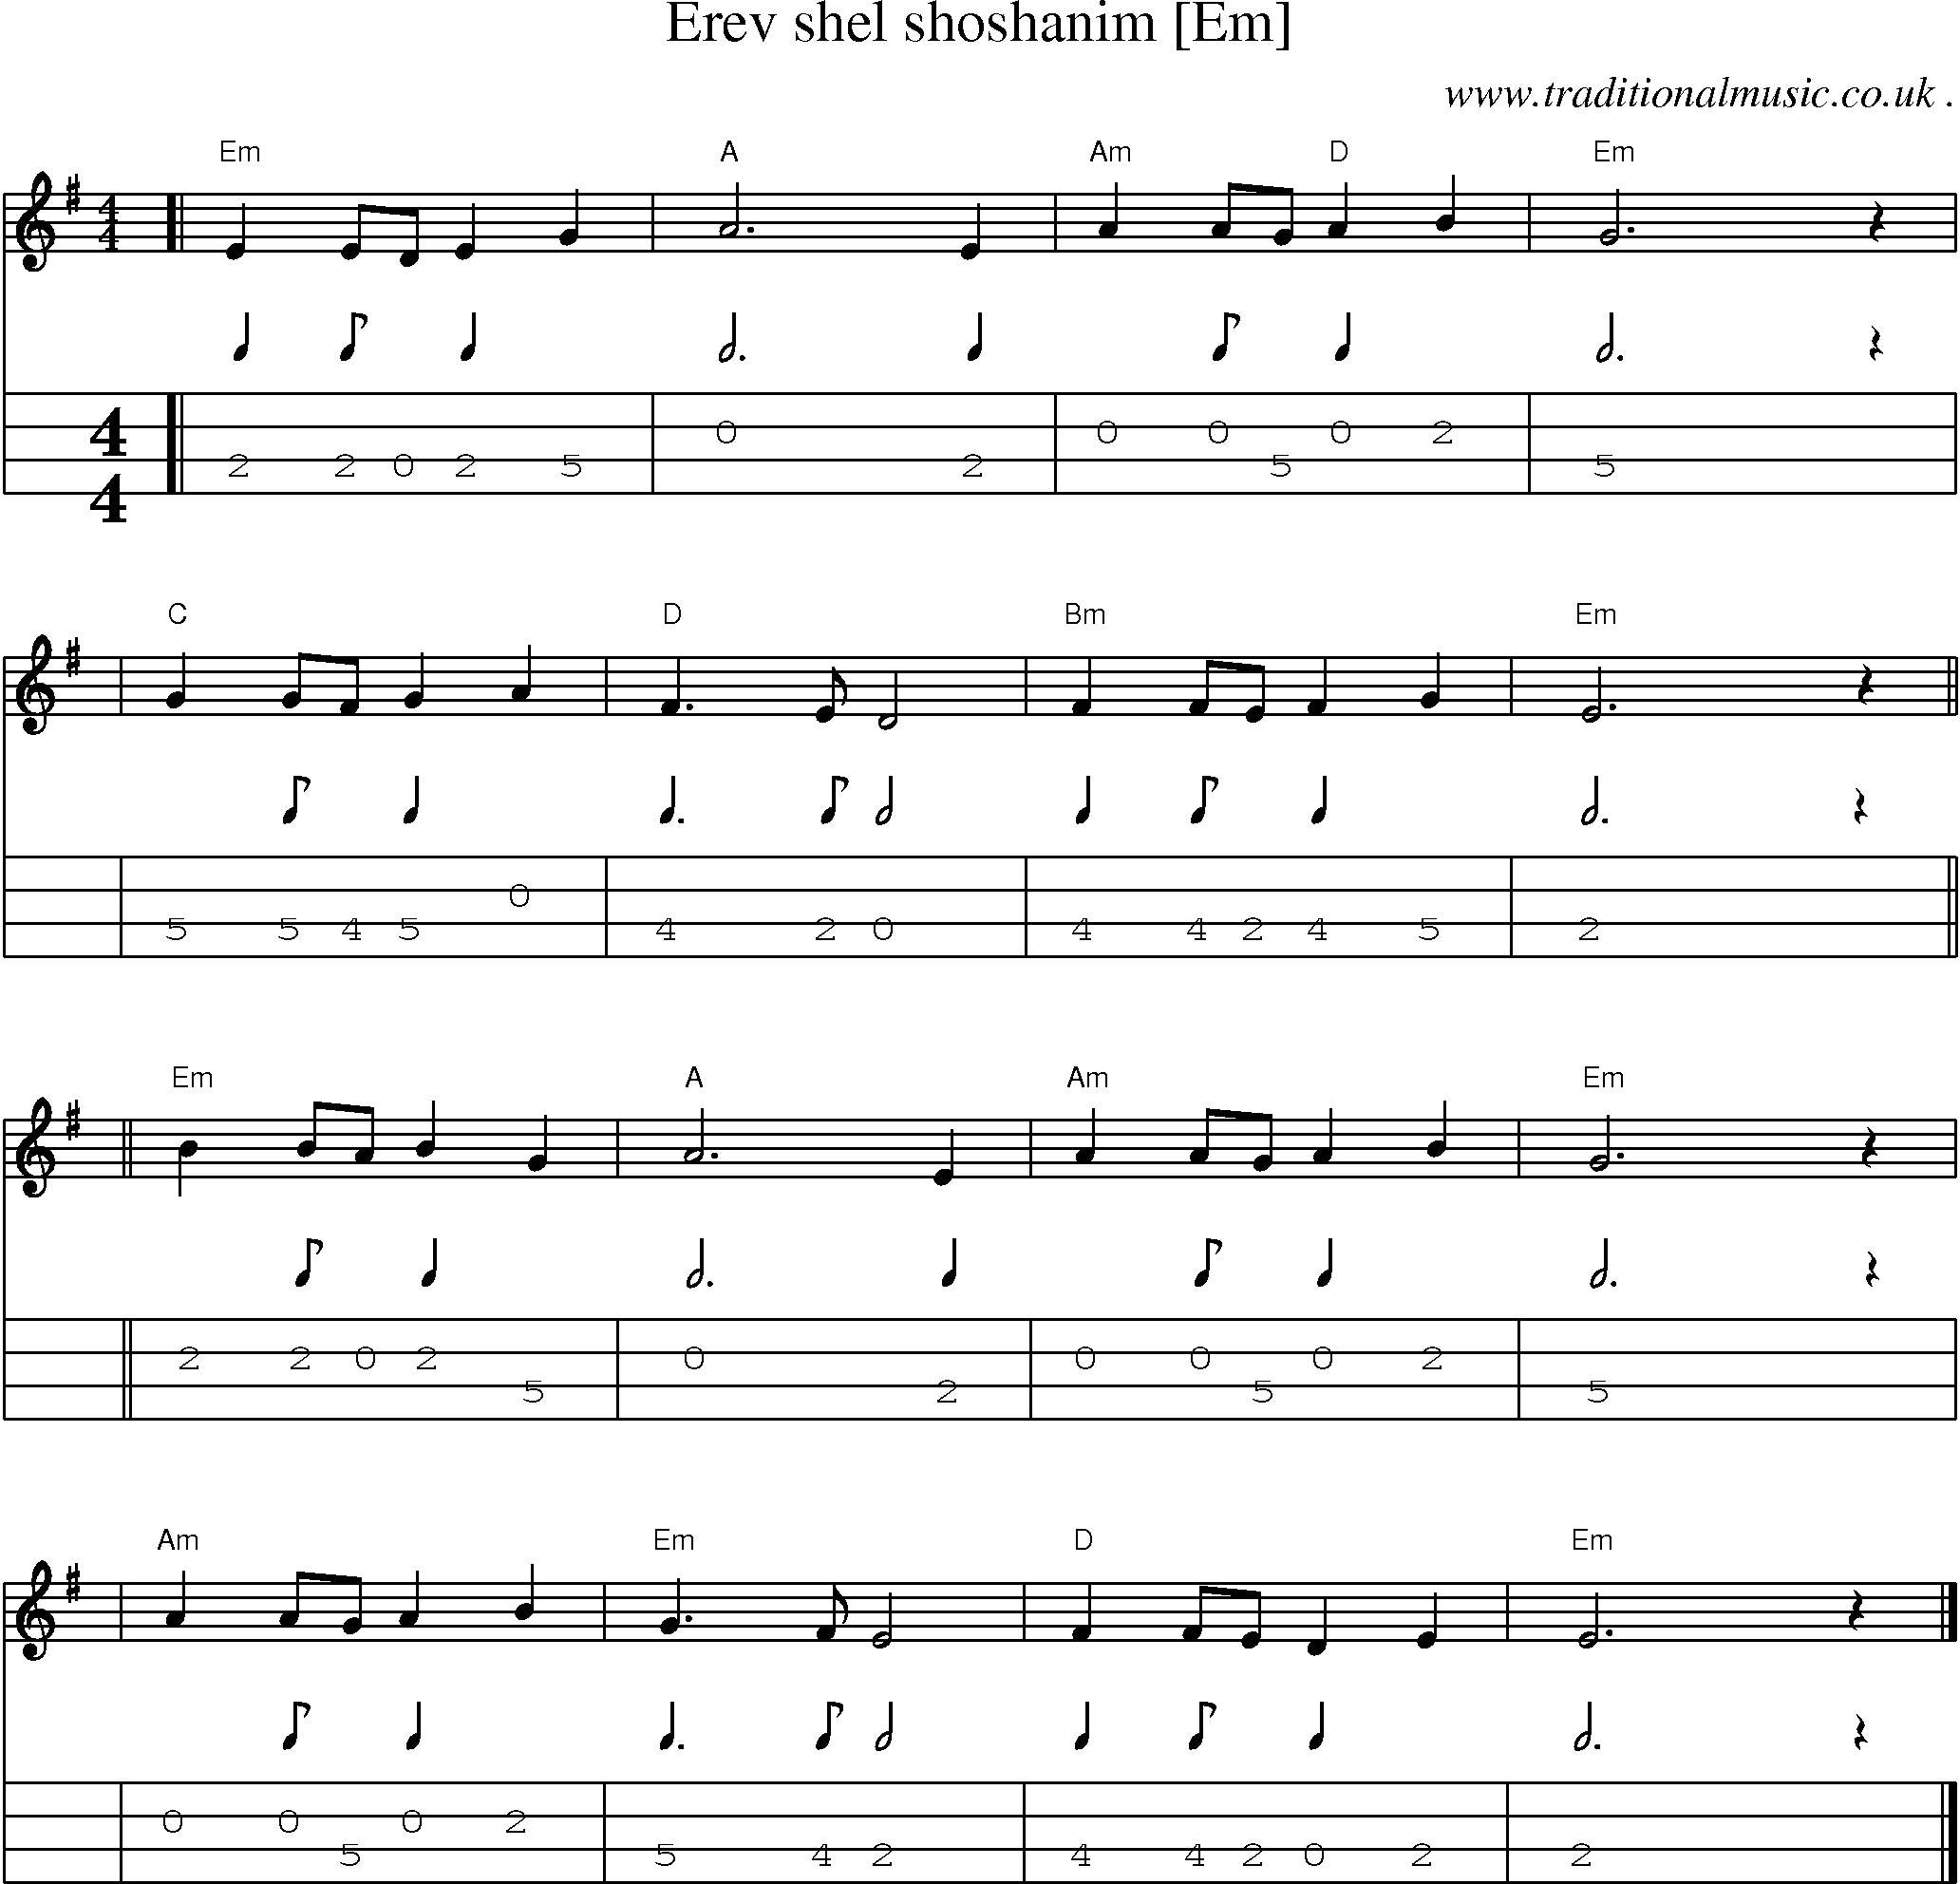 Sheet-music  score, Chords and Mandolin Tabs for Erev Shel Shoshanim [em]